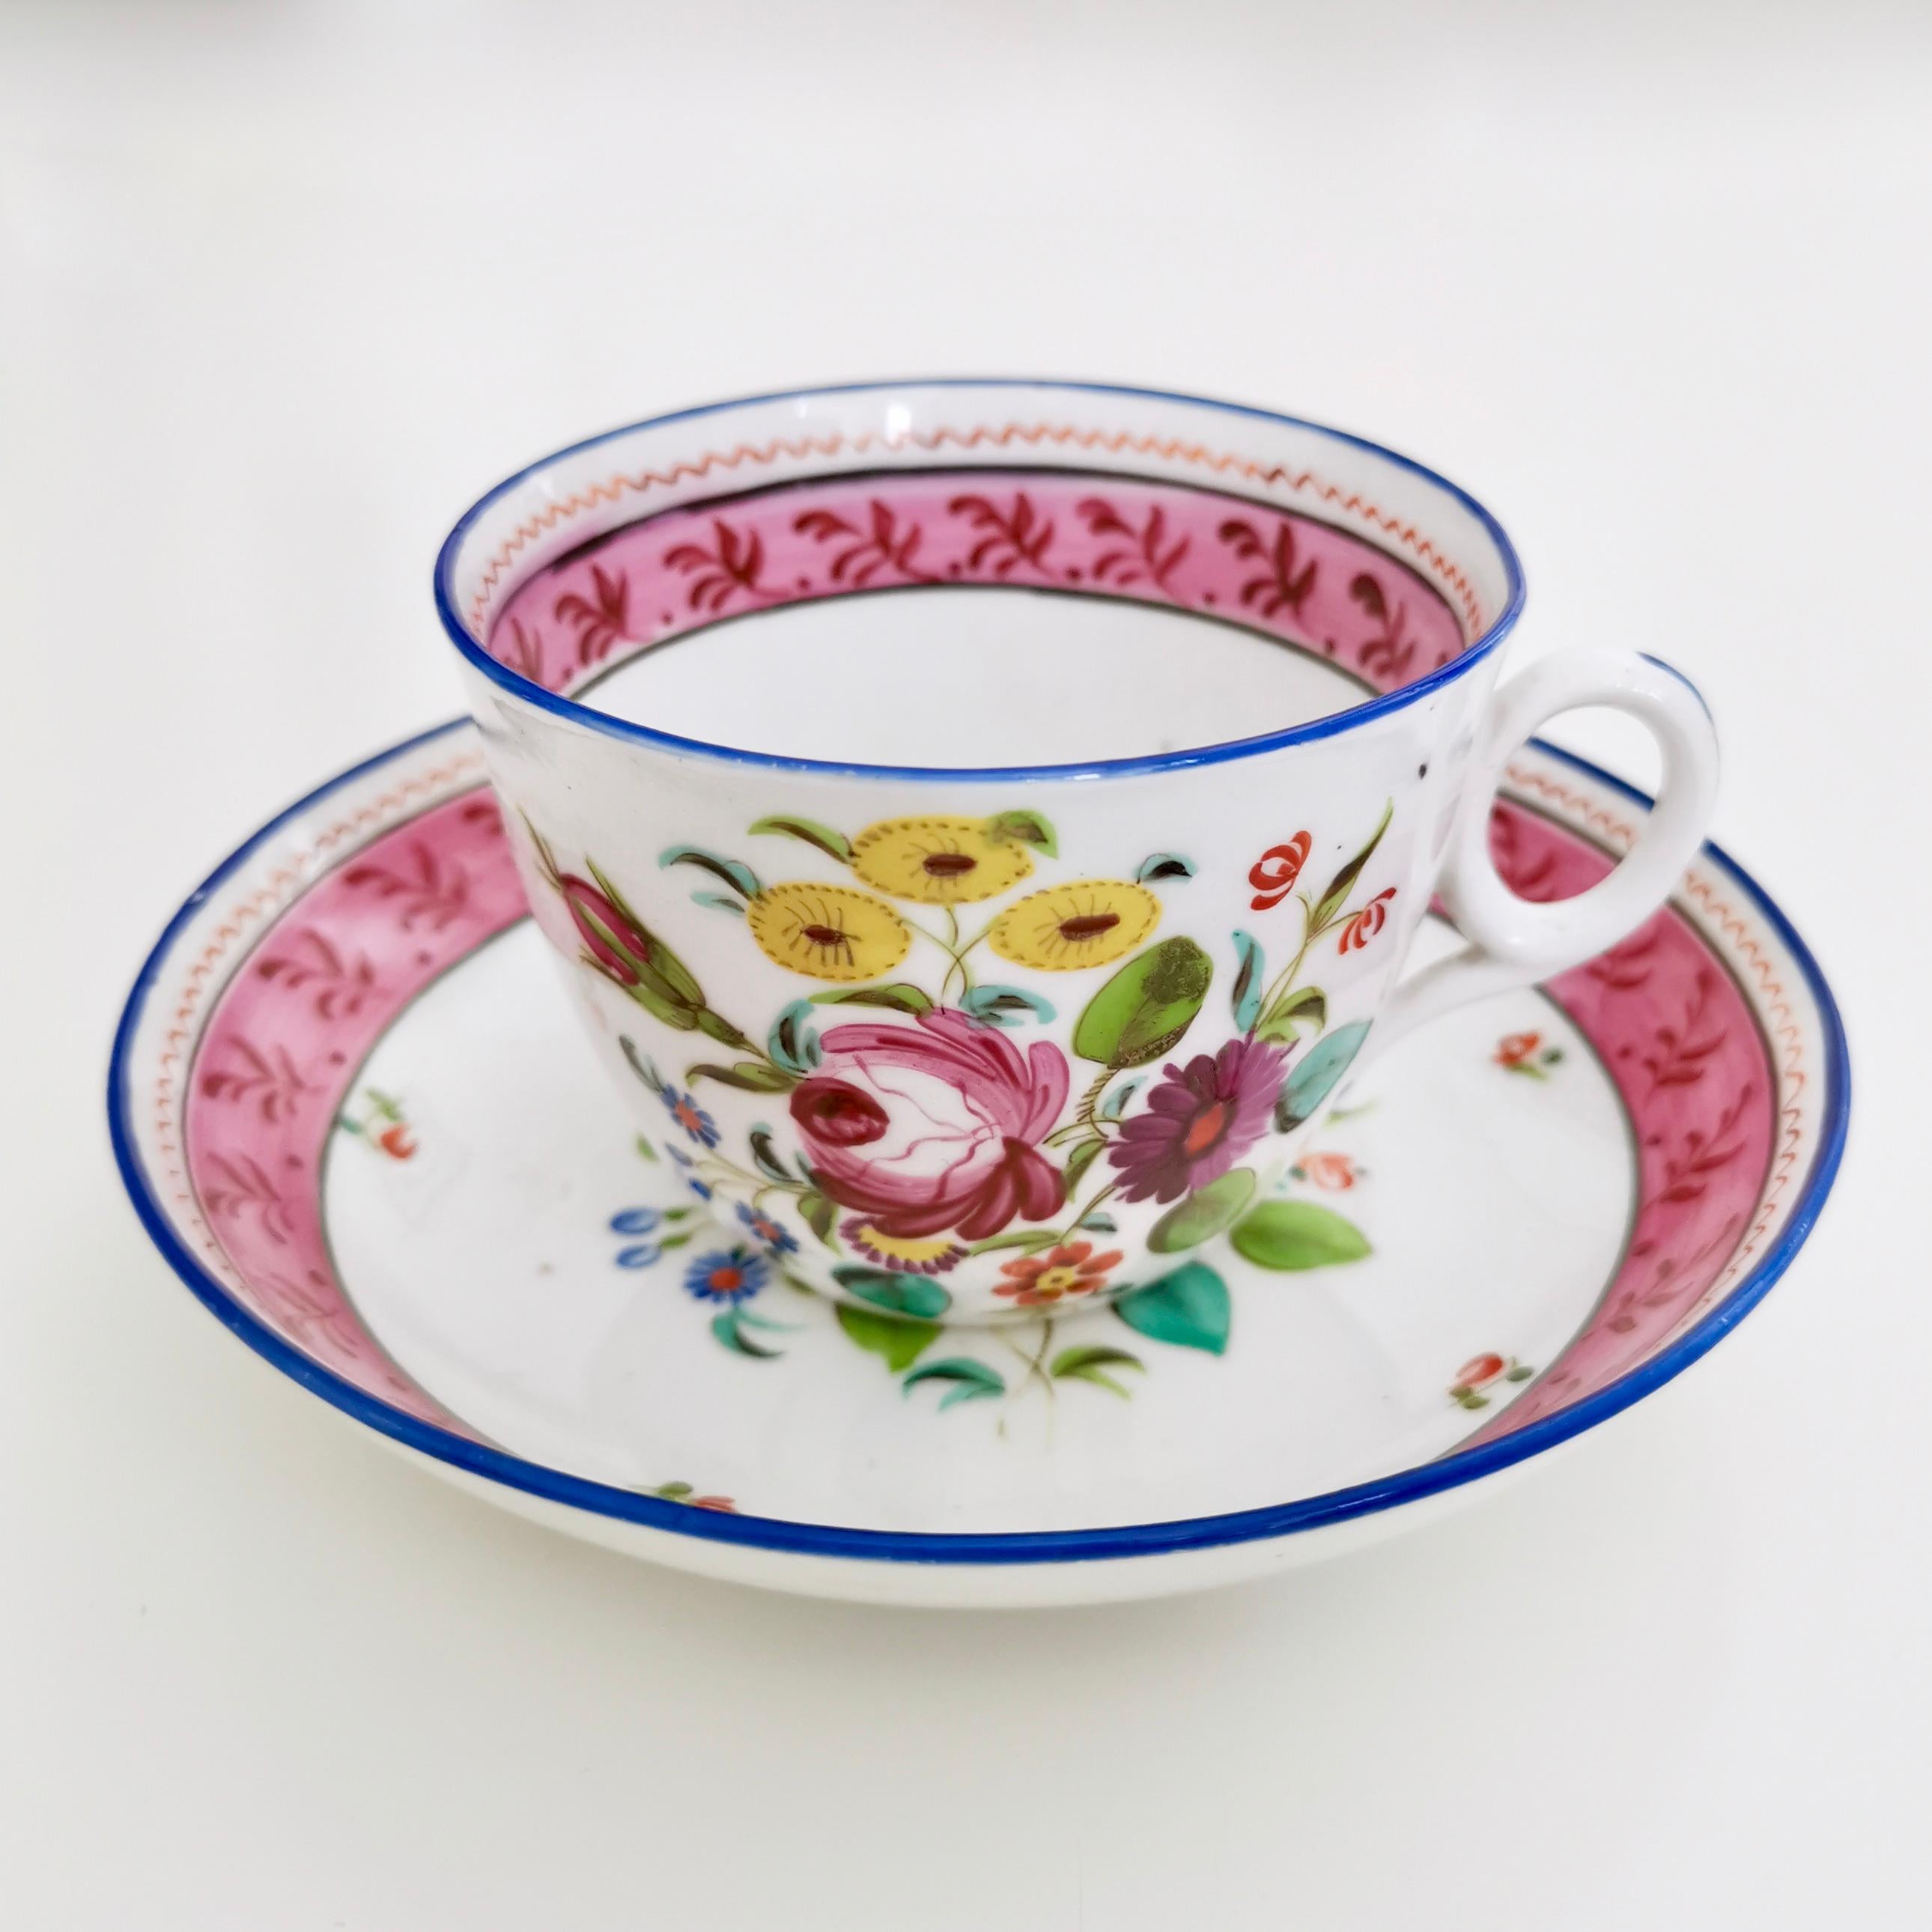 Regency New Hall Porcelain Teacup, Hybrid Paste, Flowers Patt, 1180, circa 1815